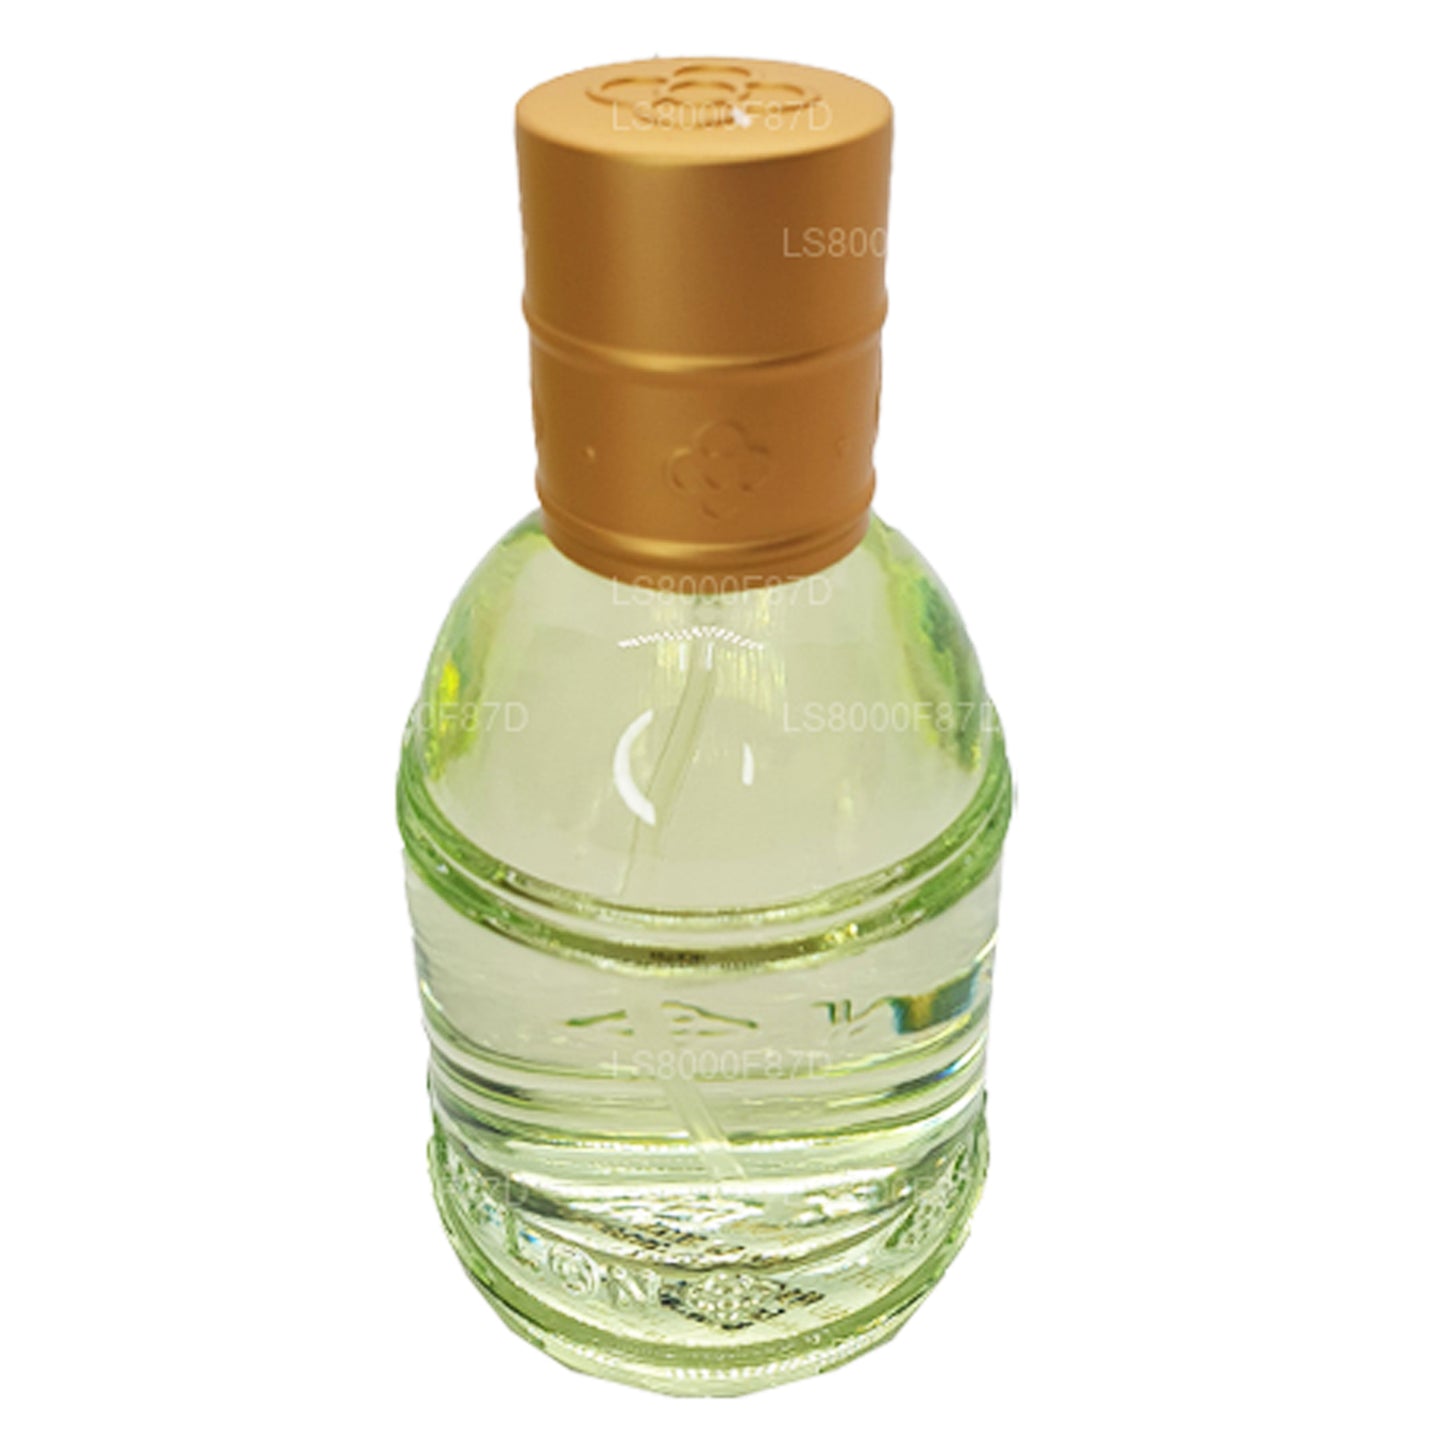 Eau de parfum Spa Ceylon Night Jasmine avec huiles essentielles mélangées (50 ml)